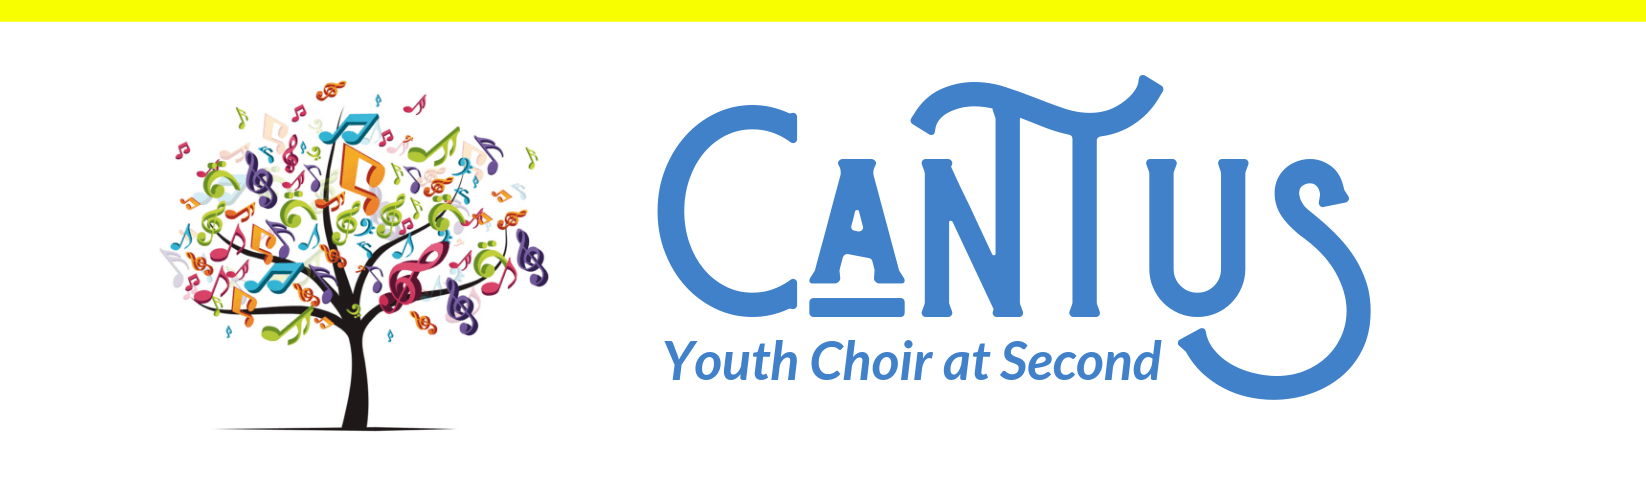 CANTUS Youth Choir